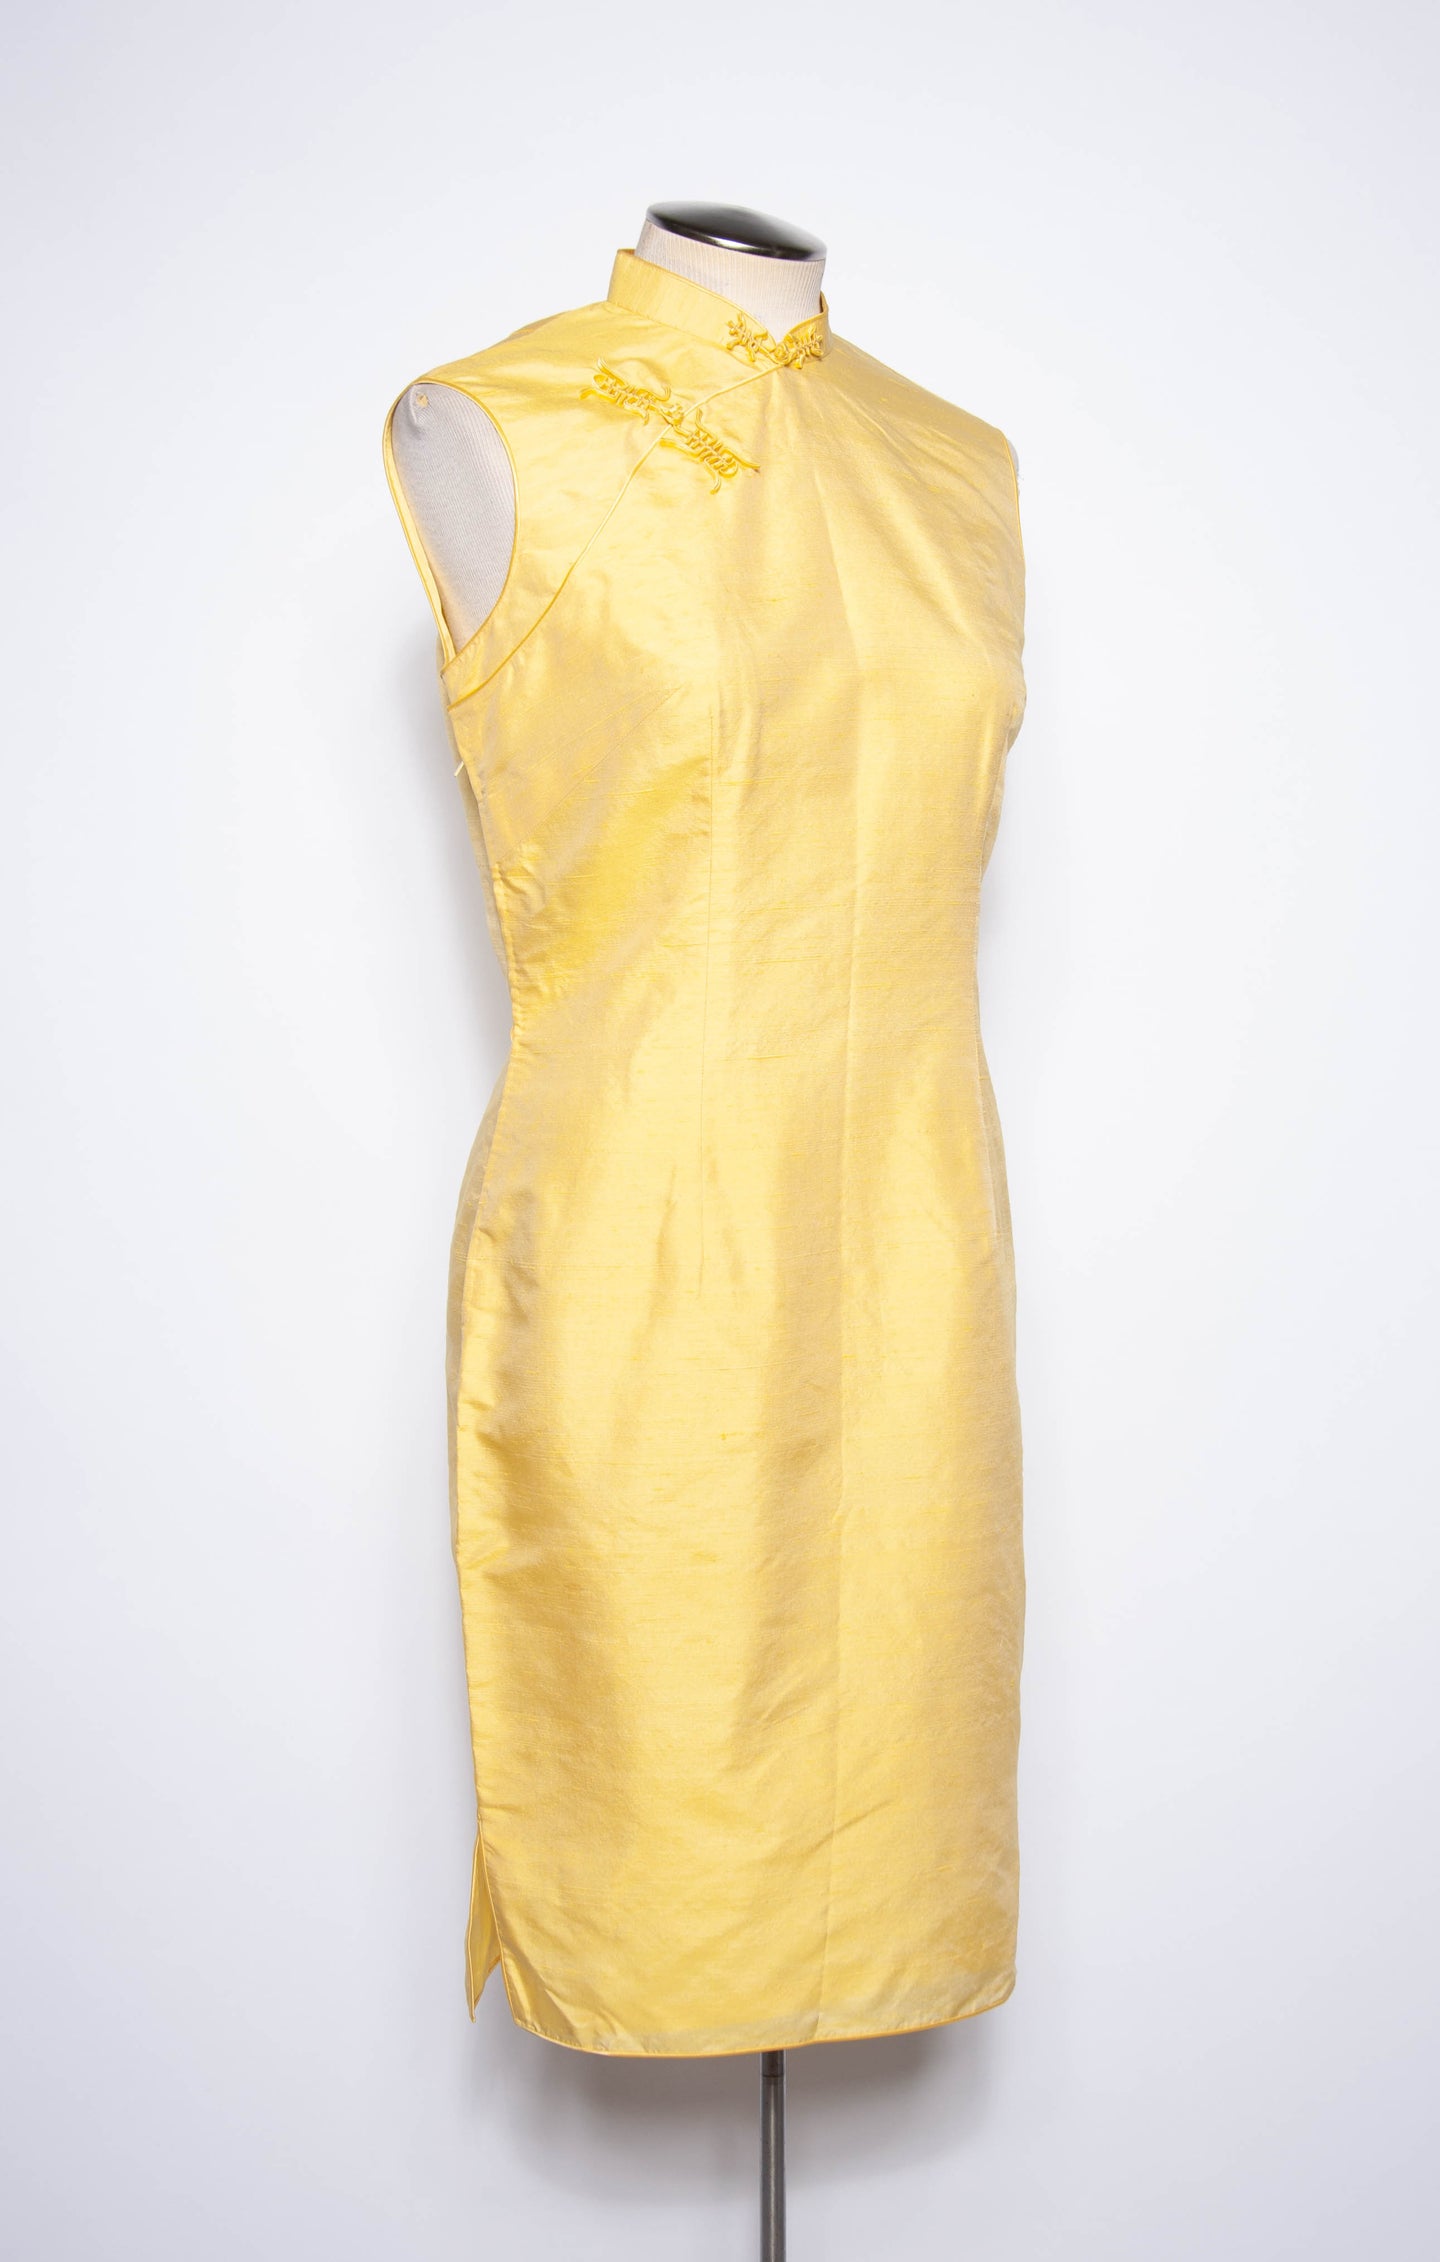 VINTAGE 1960S YELLOW SILK CHEONGSAM STYLE DRESS